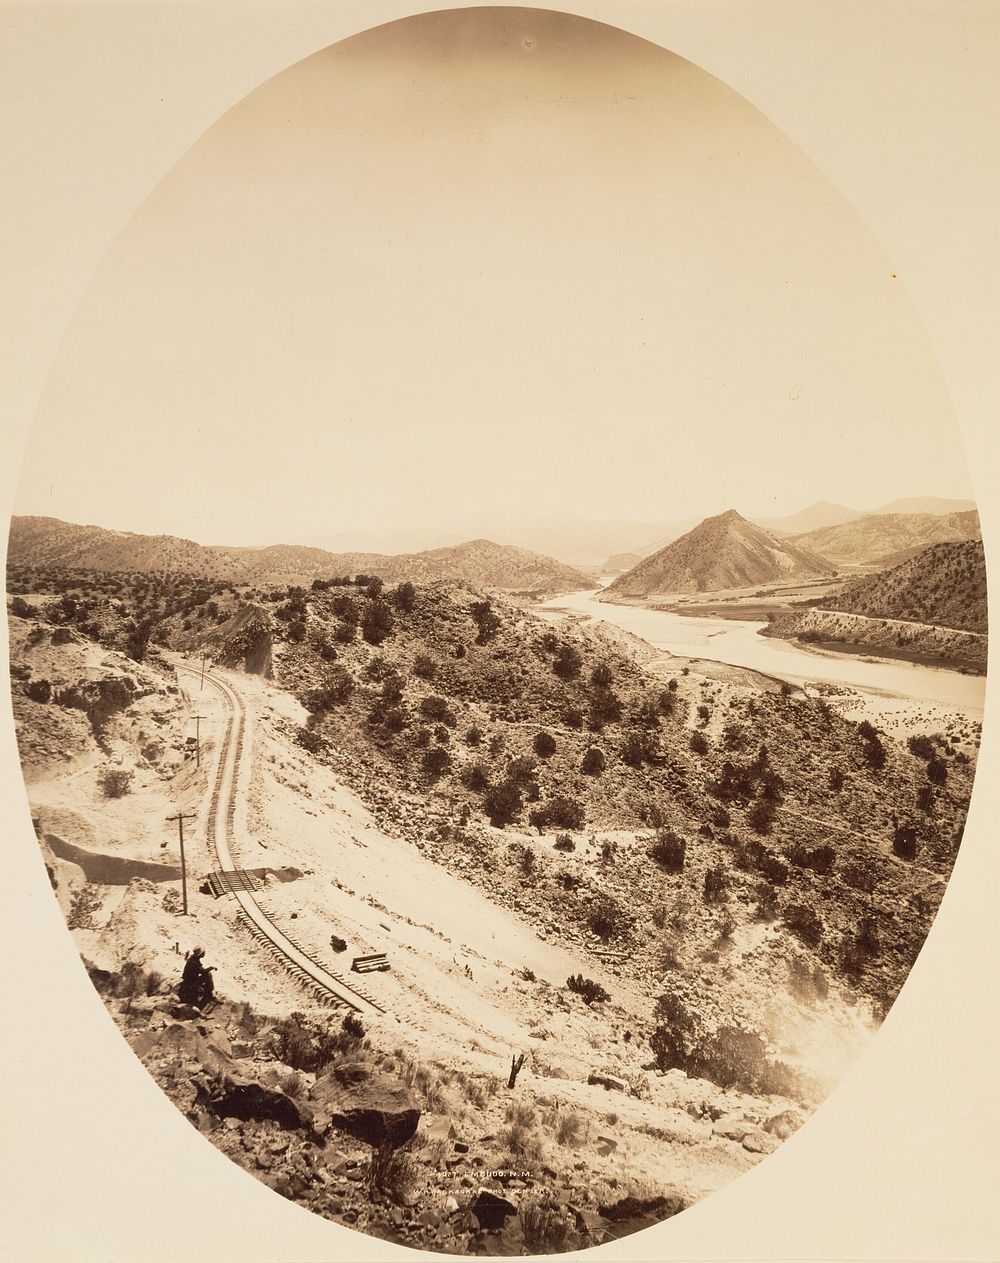 Embudo, New Mexico by William Henry Jackson